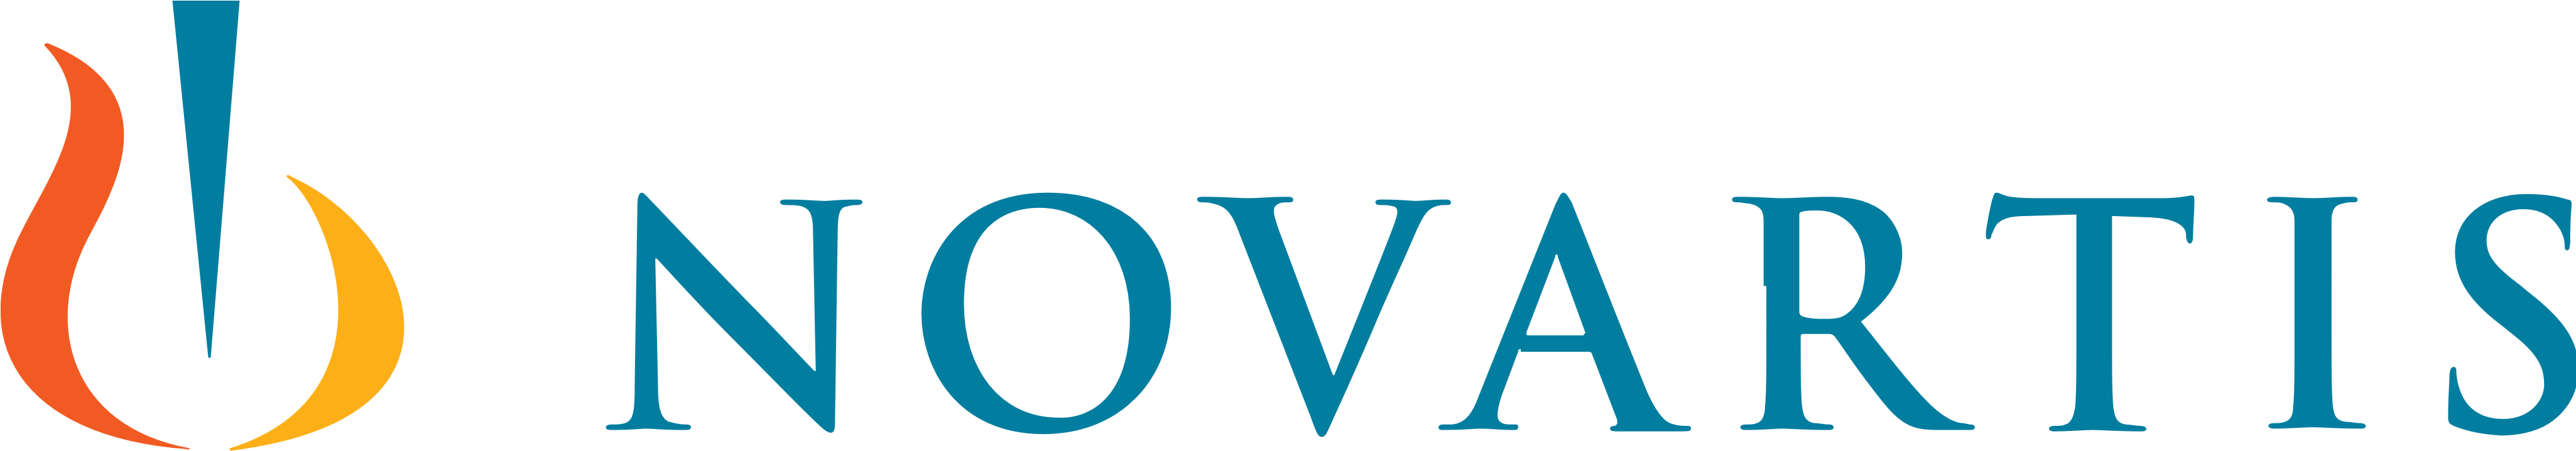 Novartis-logo